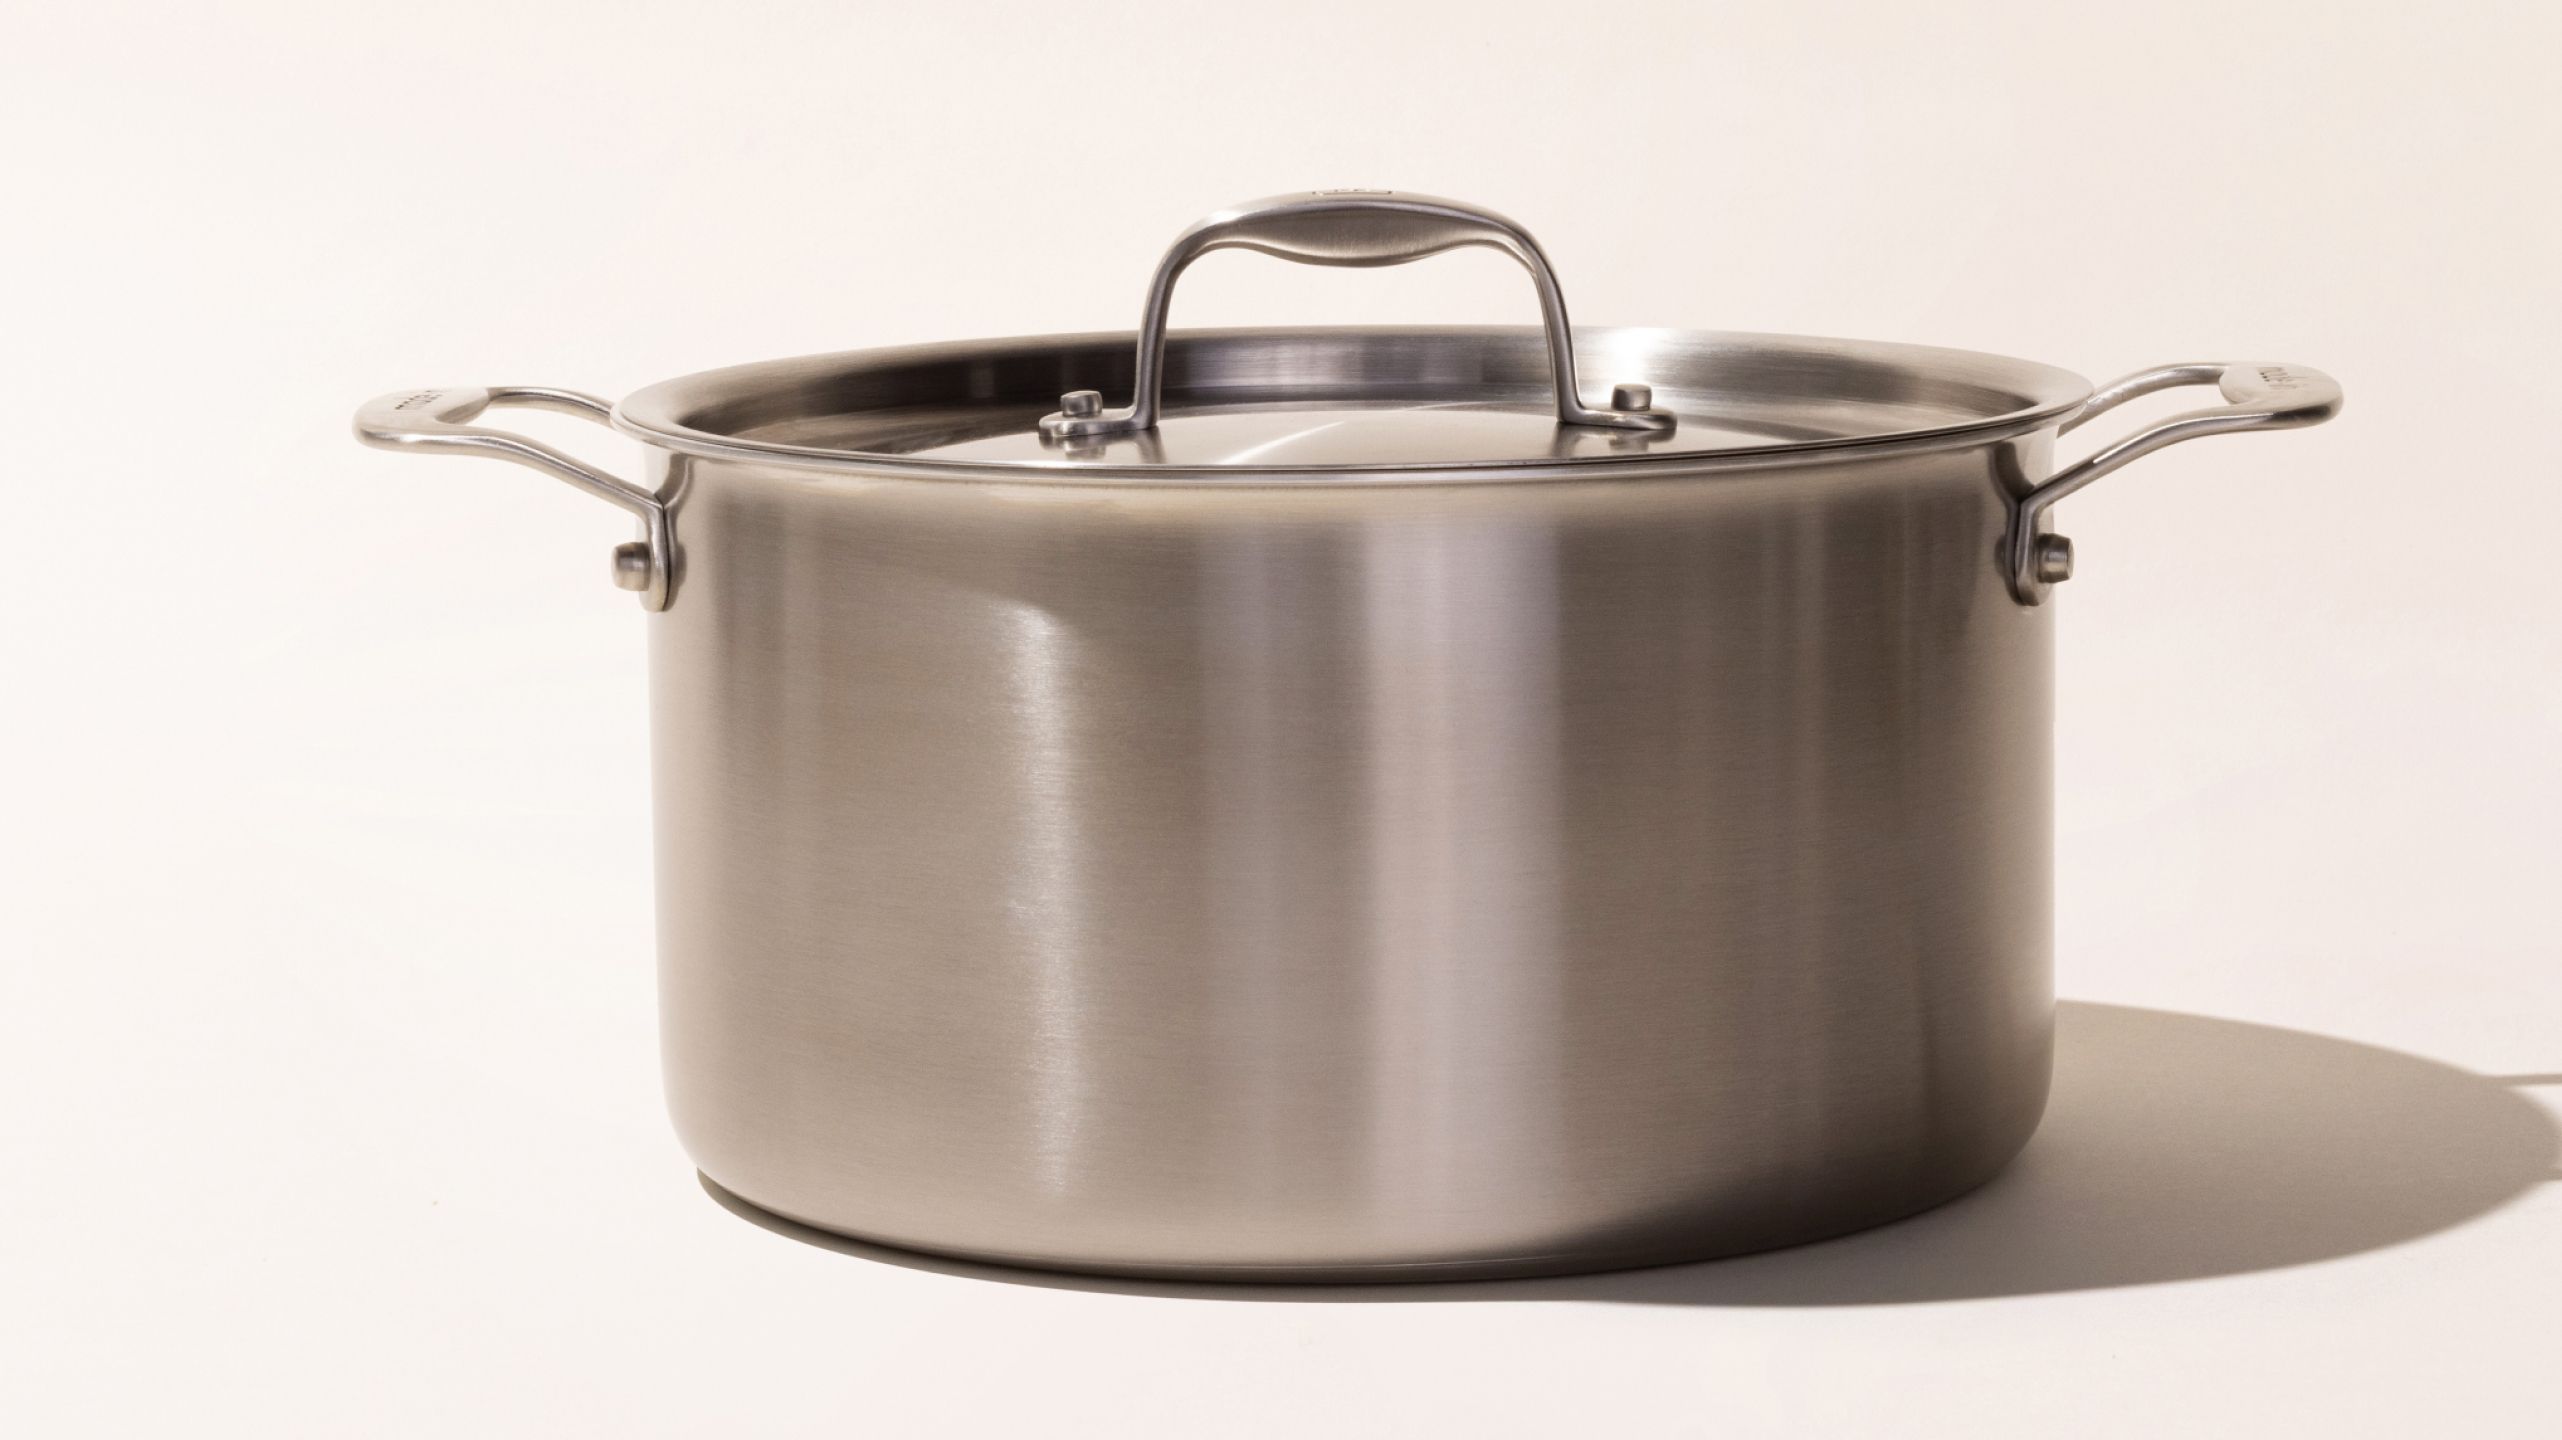 DricRoda Soup Pot 8 Quart Pot Stainless Steel Pasta Pot, Nonstick